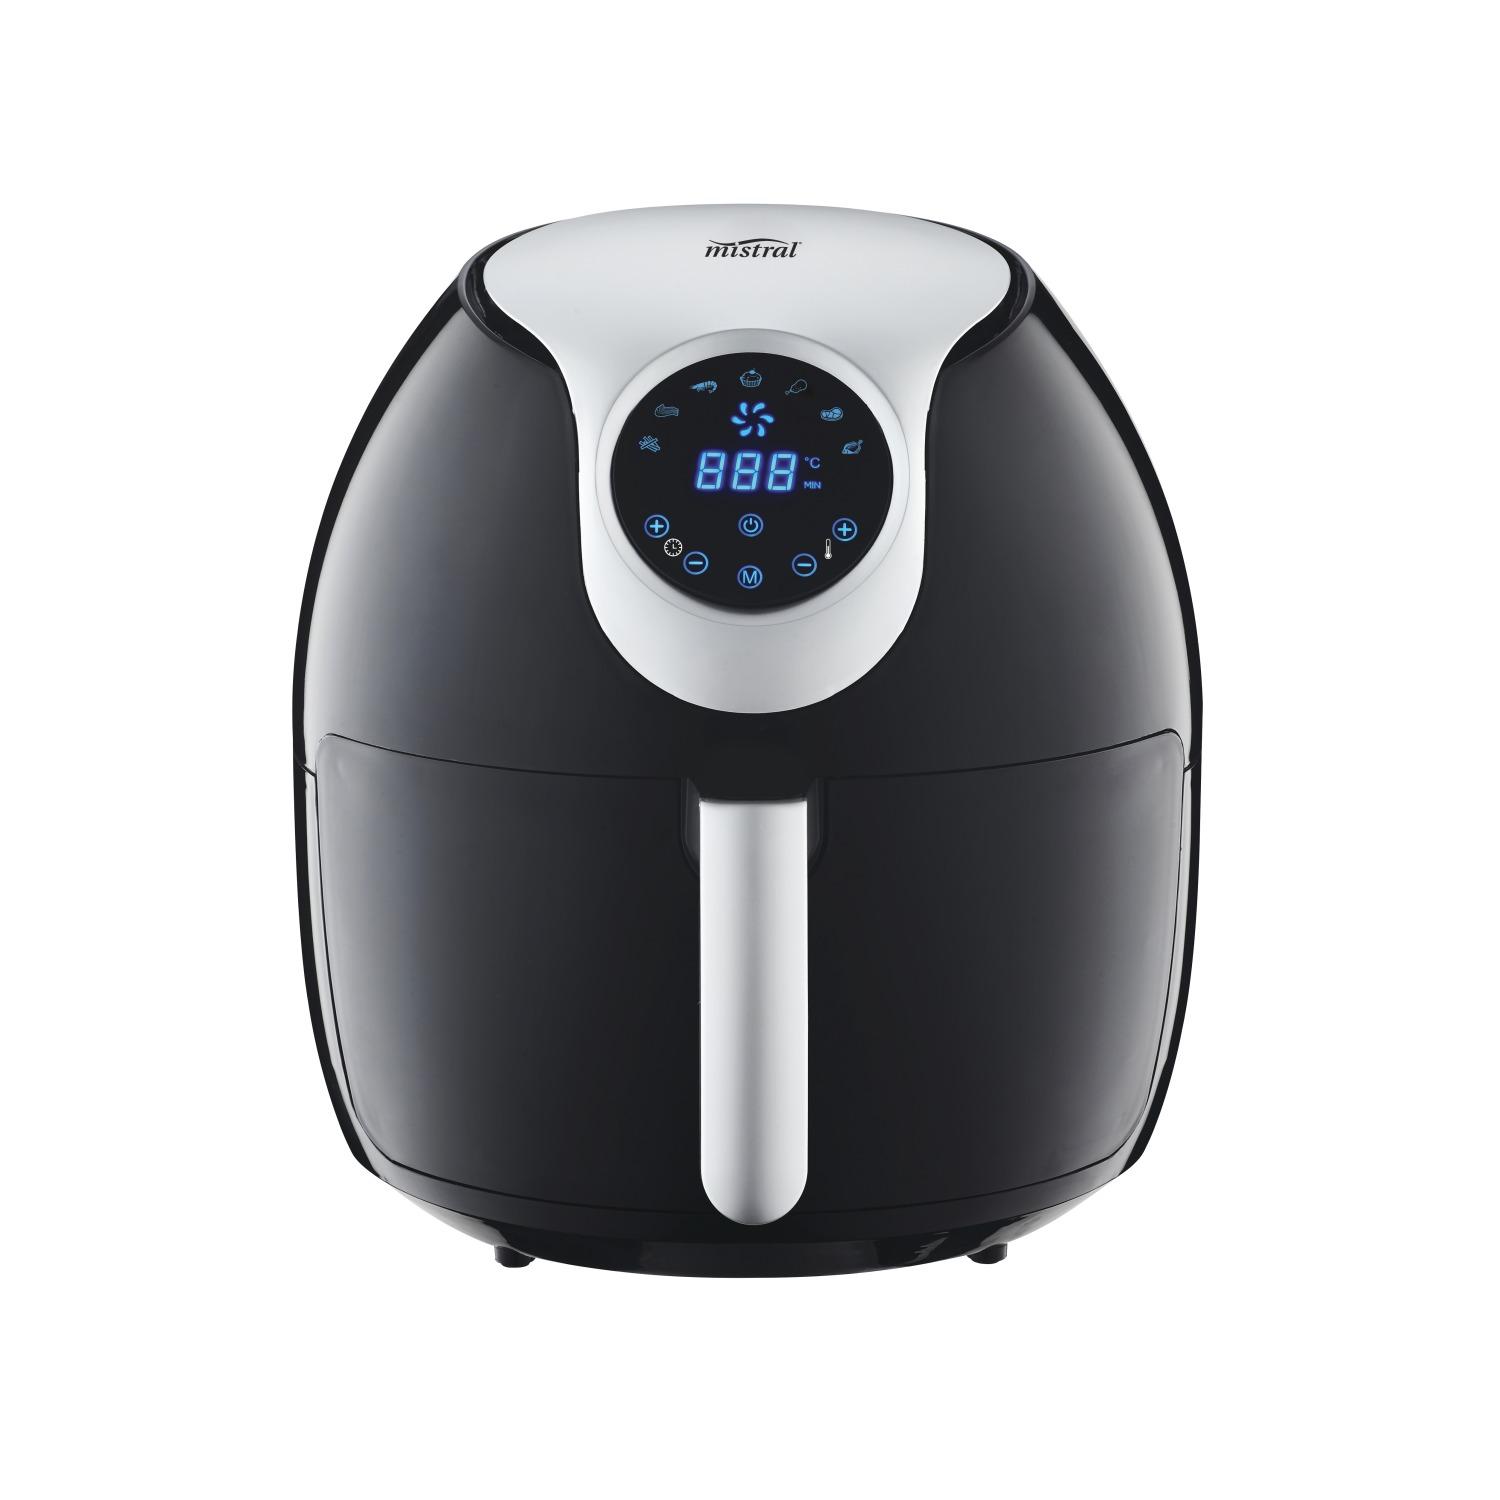 Mistral 10L Digital Healthy Air Fryer Black - Home appliances